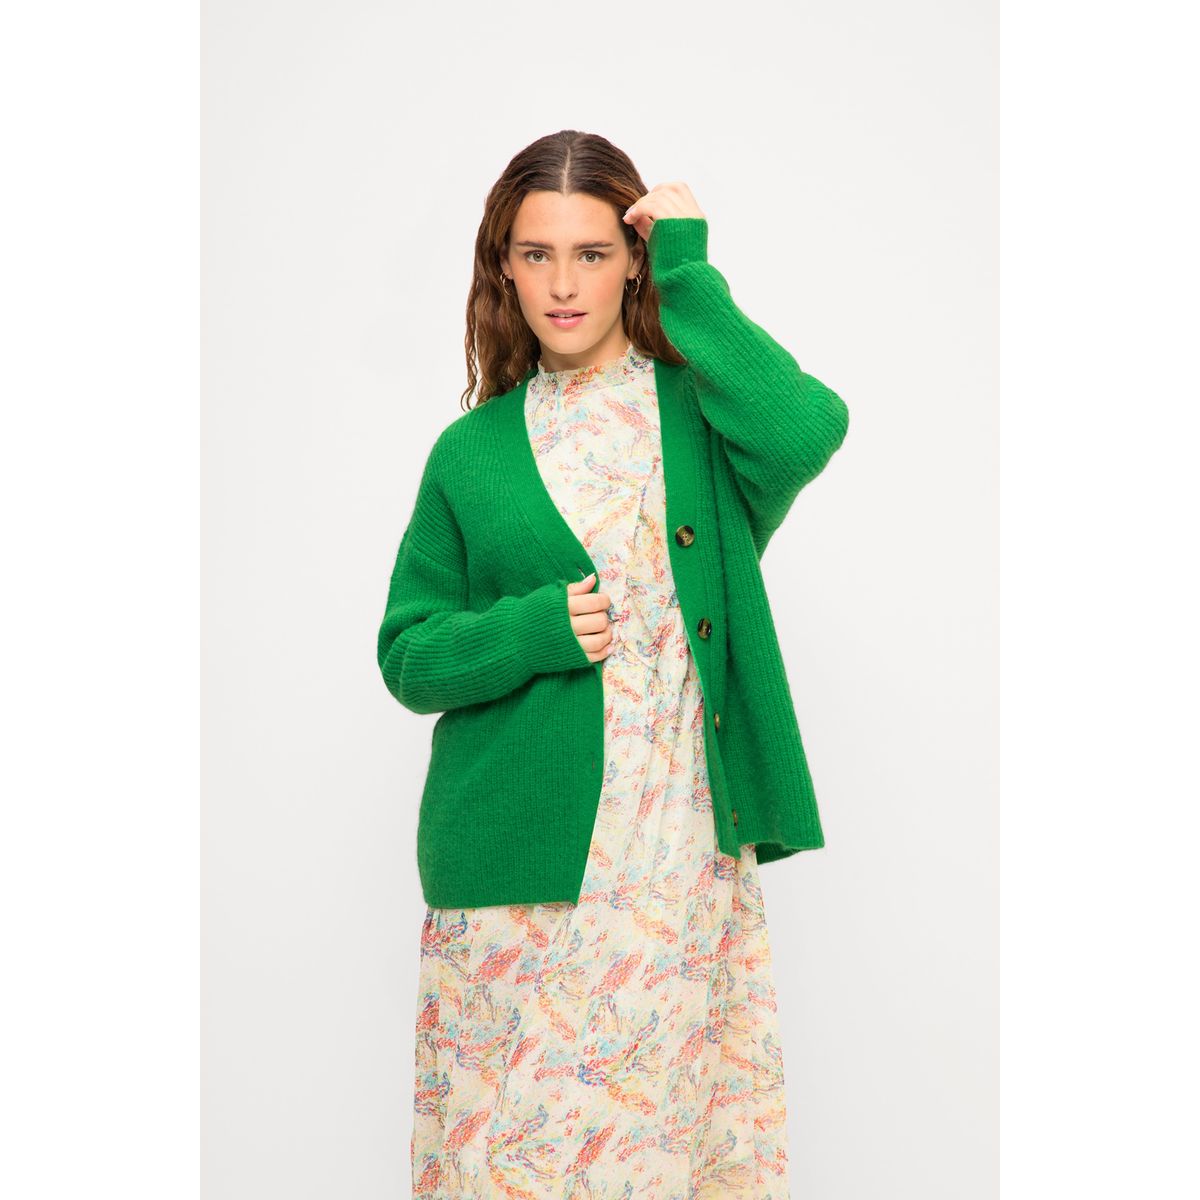 Gilet long en maille - Cardigan femme - Couleur vert émeraude